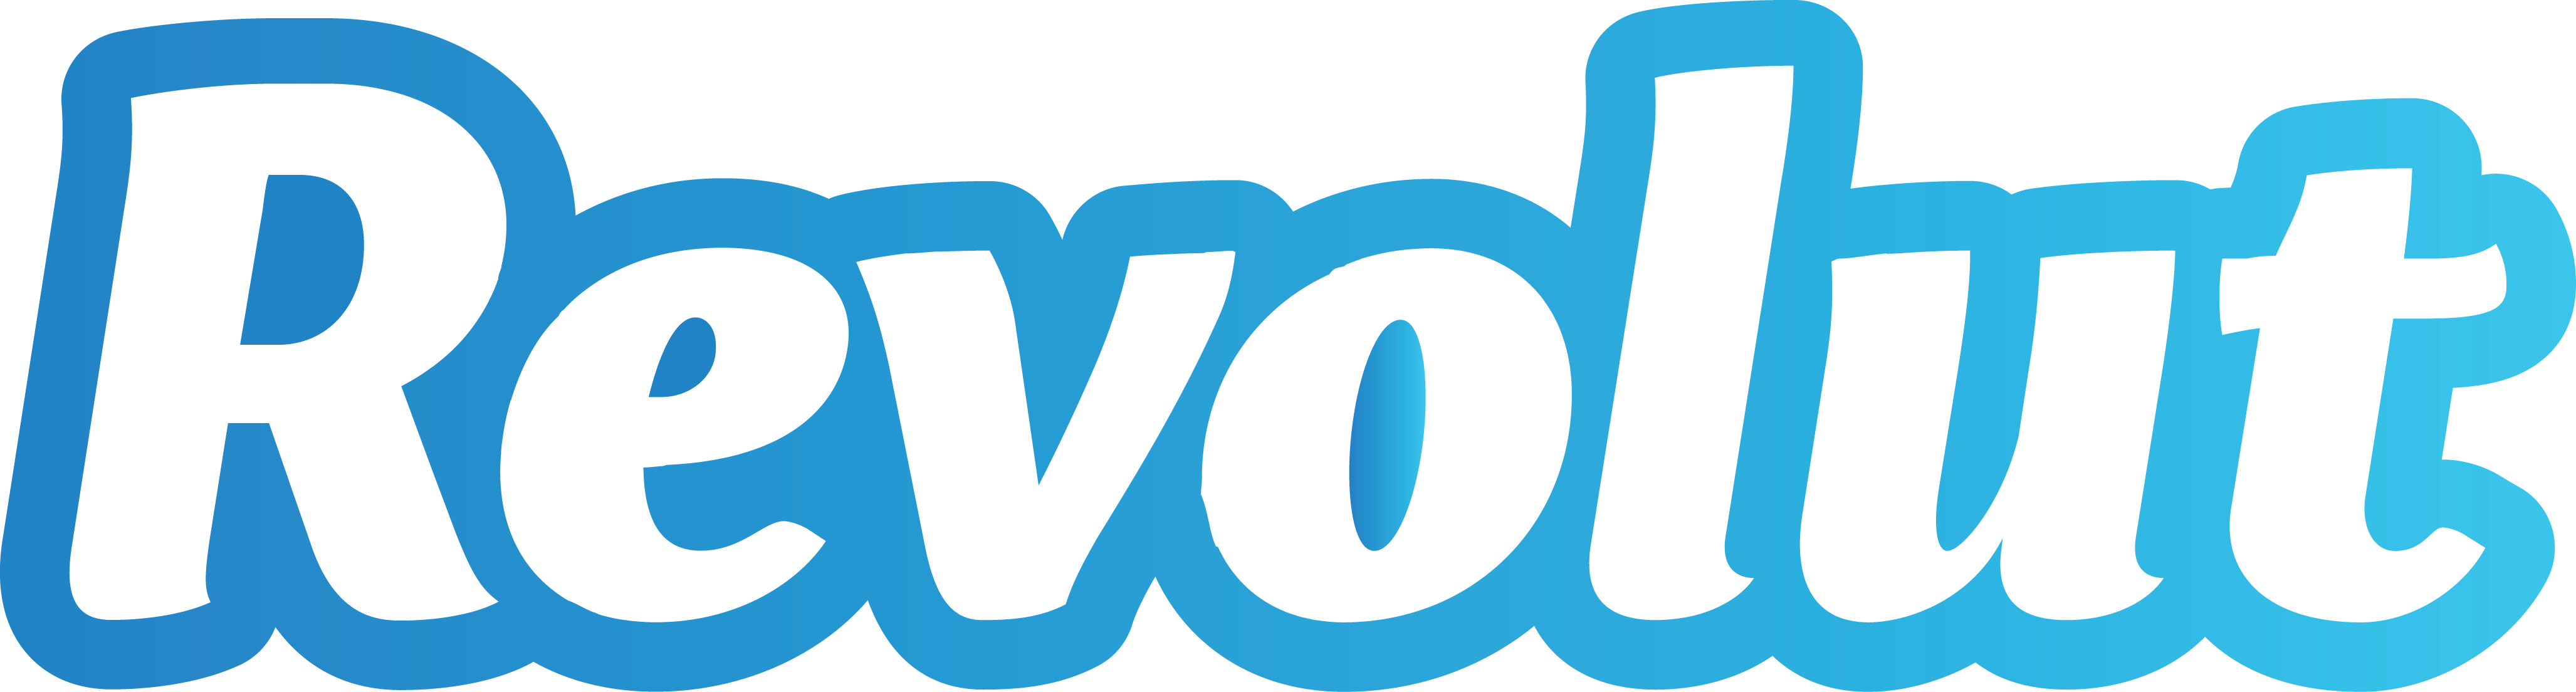 vivid logo